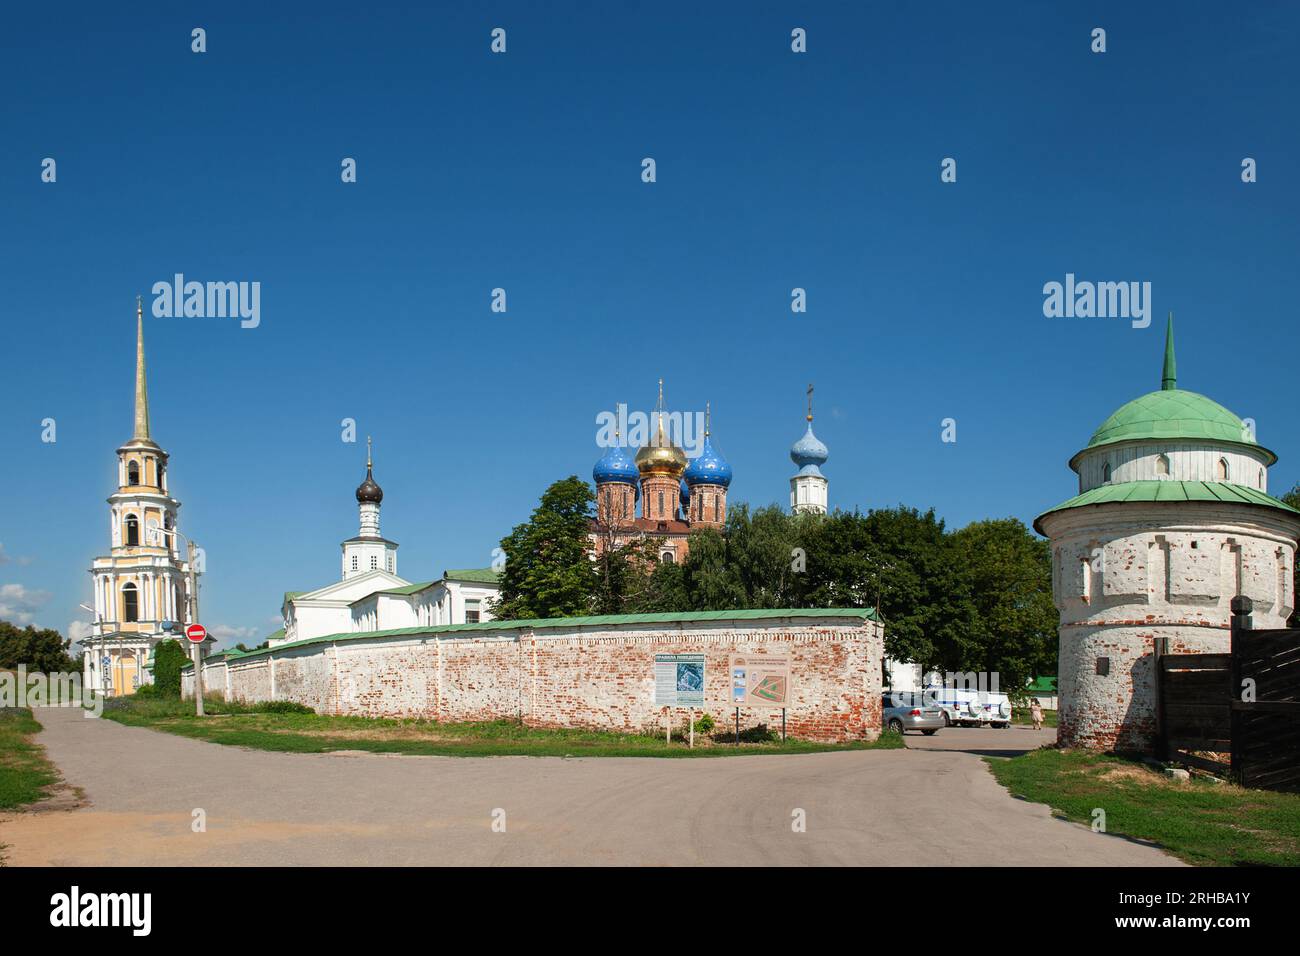 Summer view of Ryazan Kremlin and Spaso-Preobrazhensky monastery in Ryazan city, Russia. Stock Photo